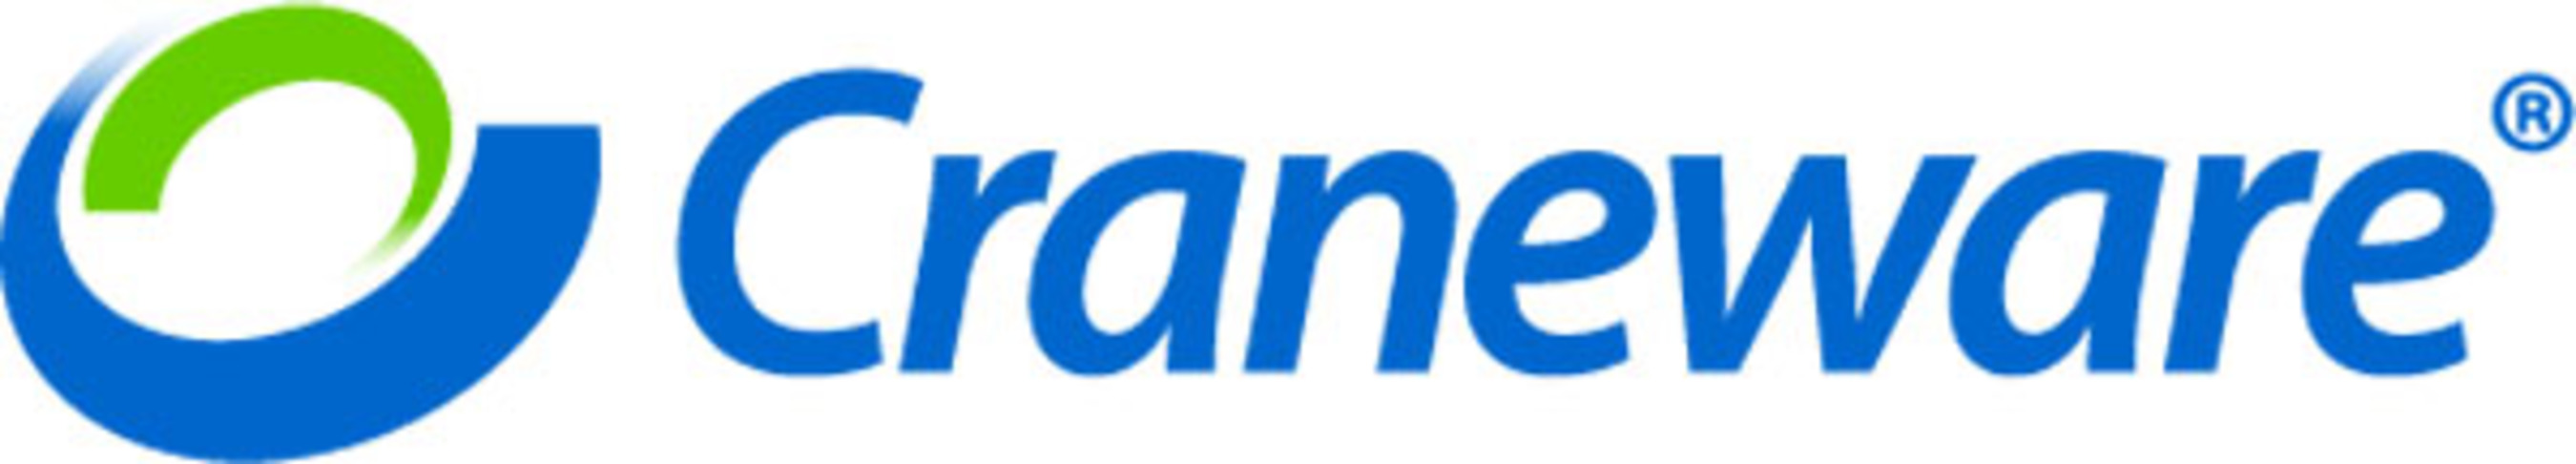 Craneware, Inc. logo.